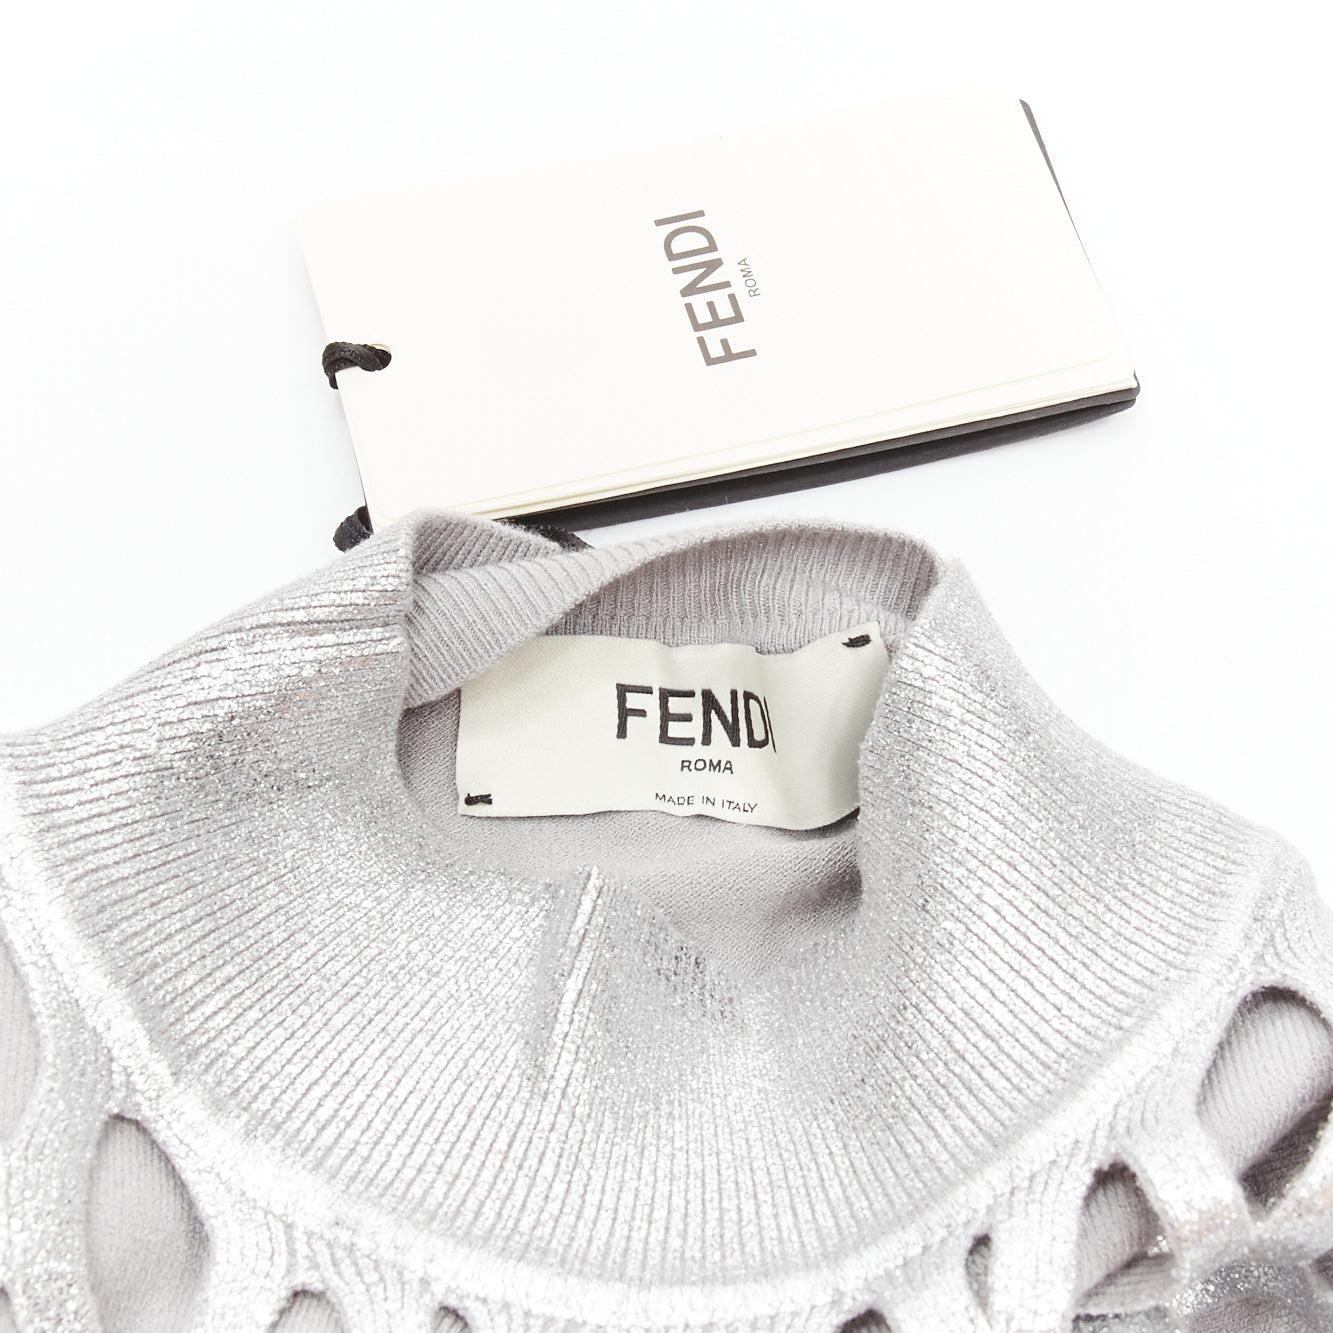 new FENDI Nicki Minaj 2019 Runway Abito silver net cut out lined dress IT42 M For Sale 3